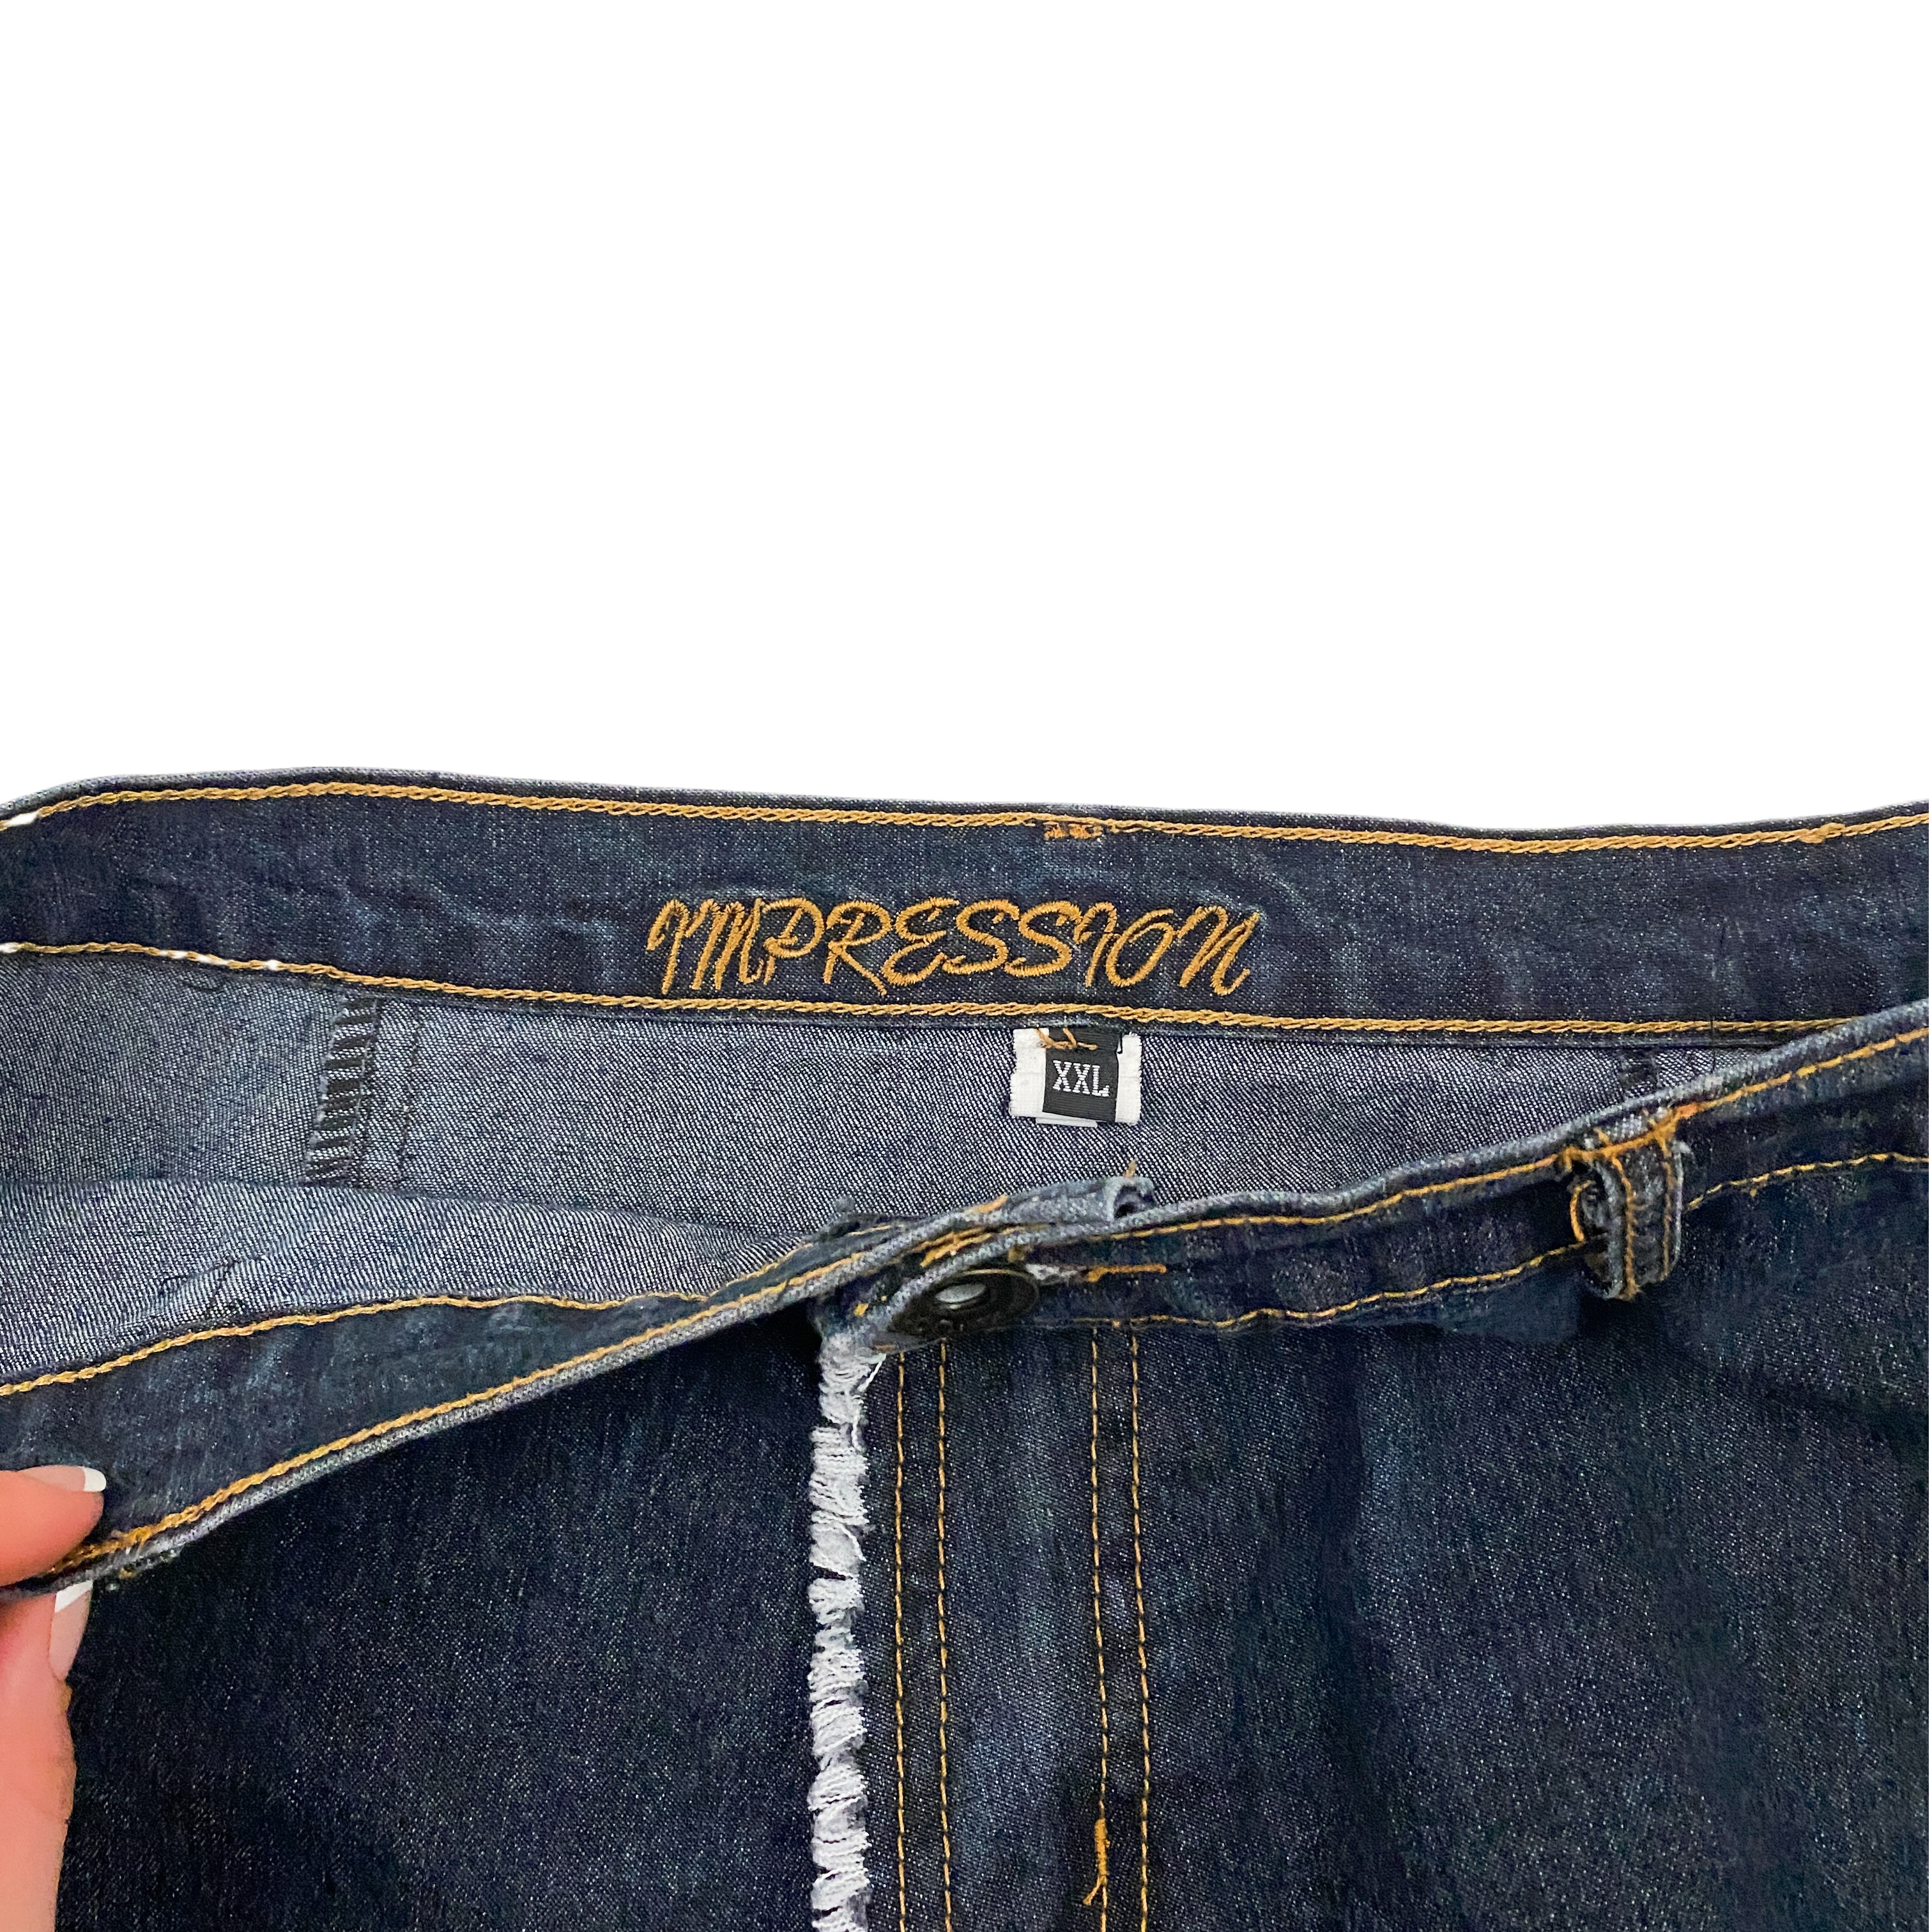 Denim Rhinestone Flared Midi Skirt (XL)